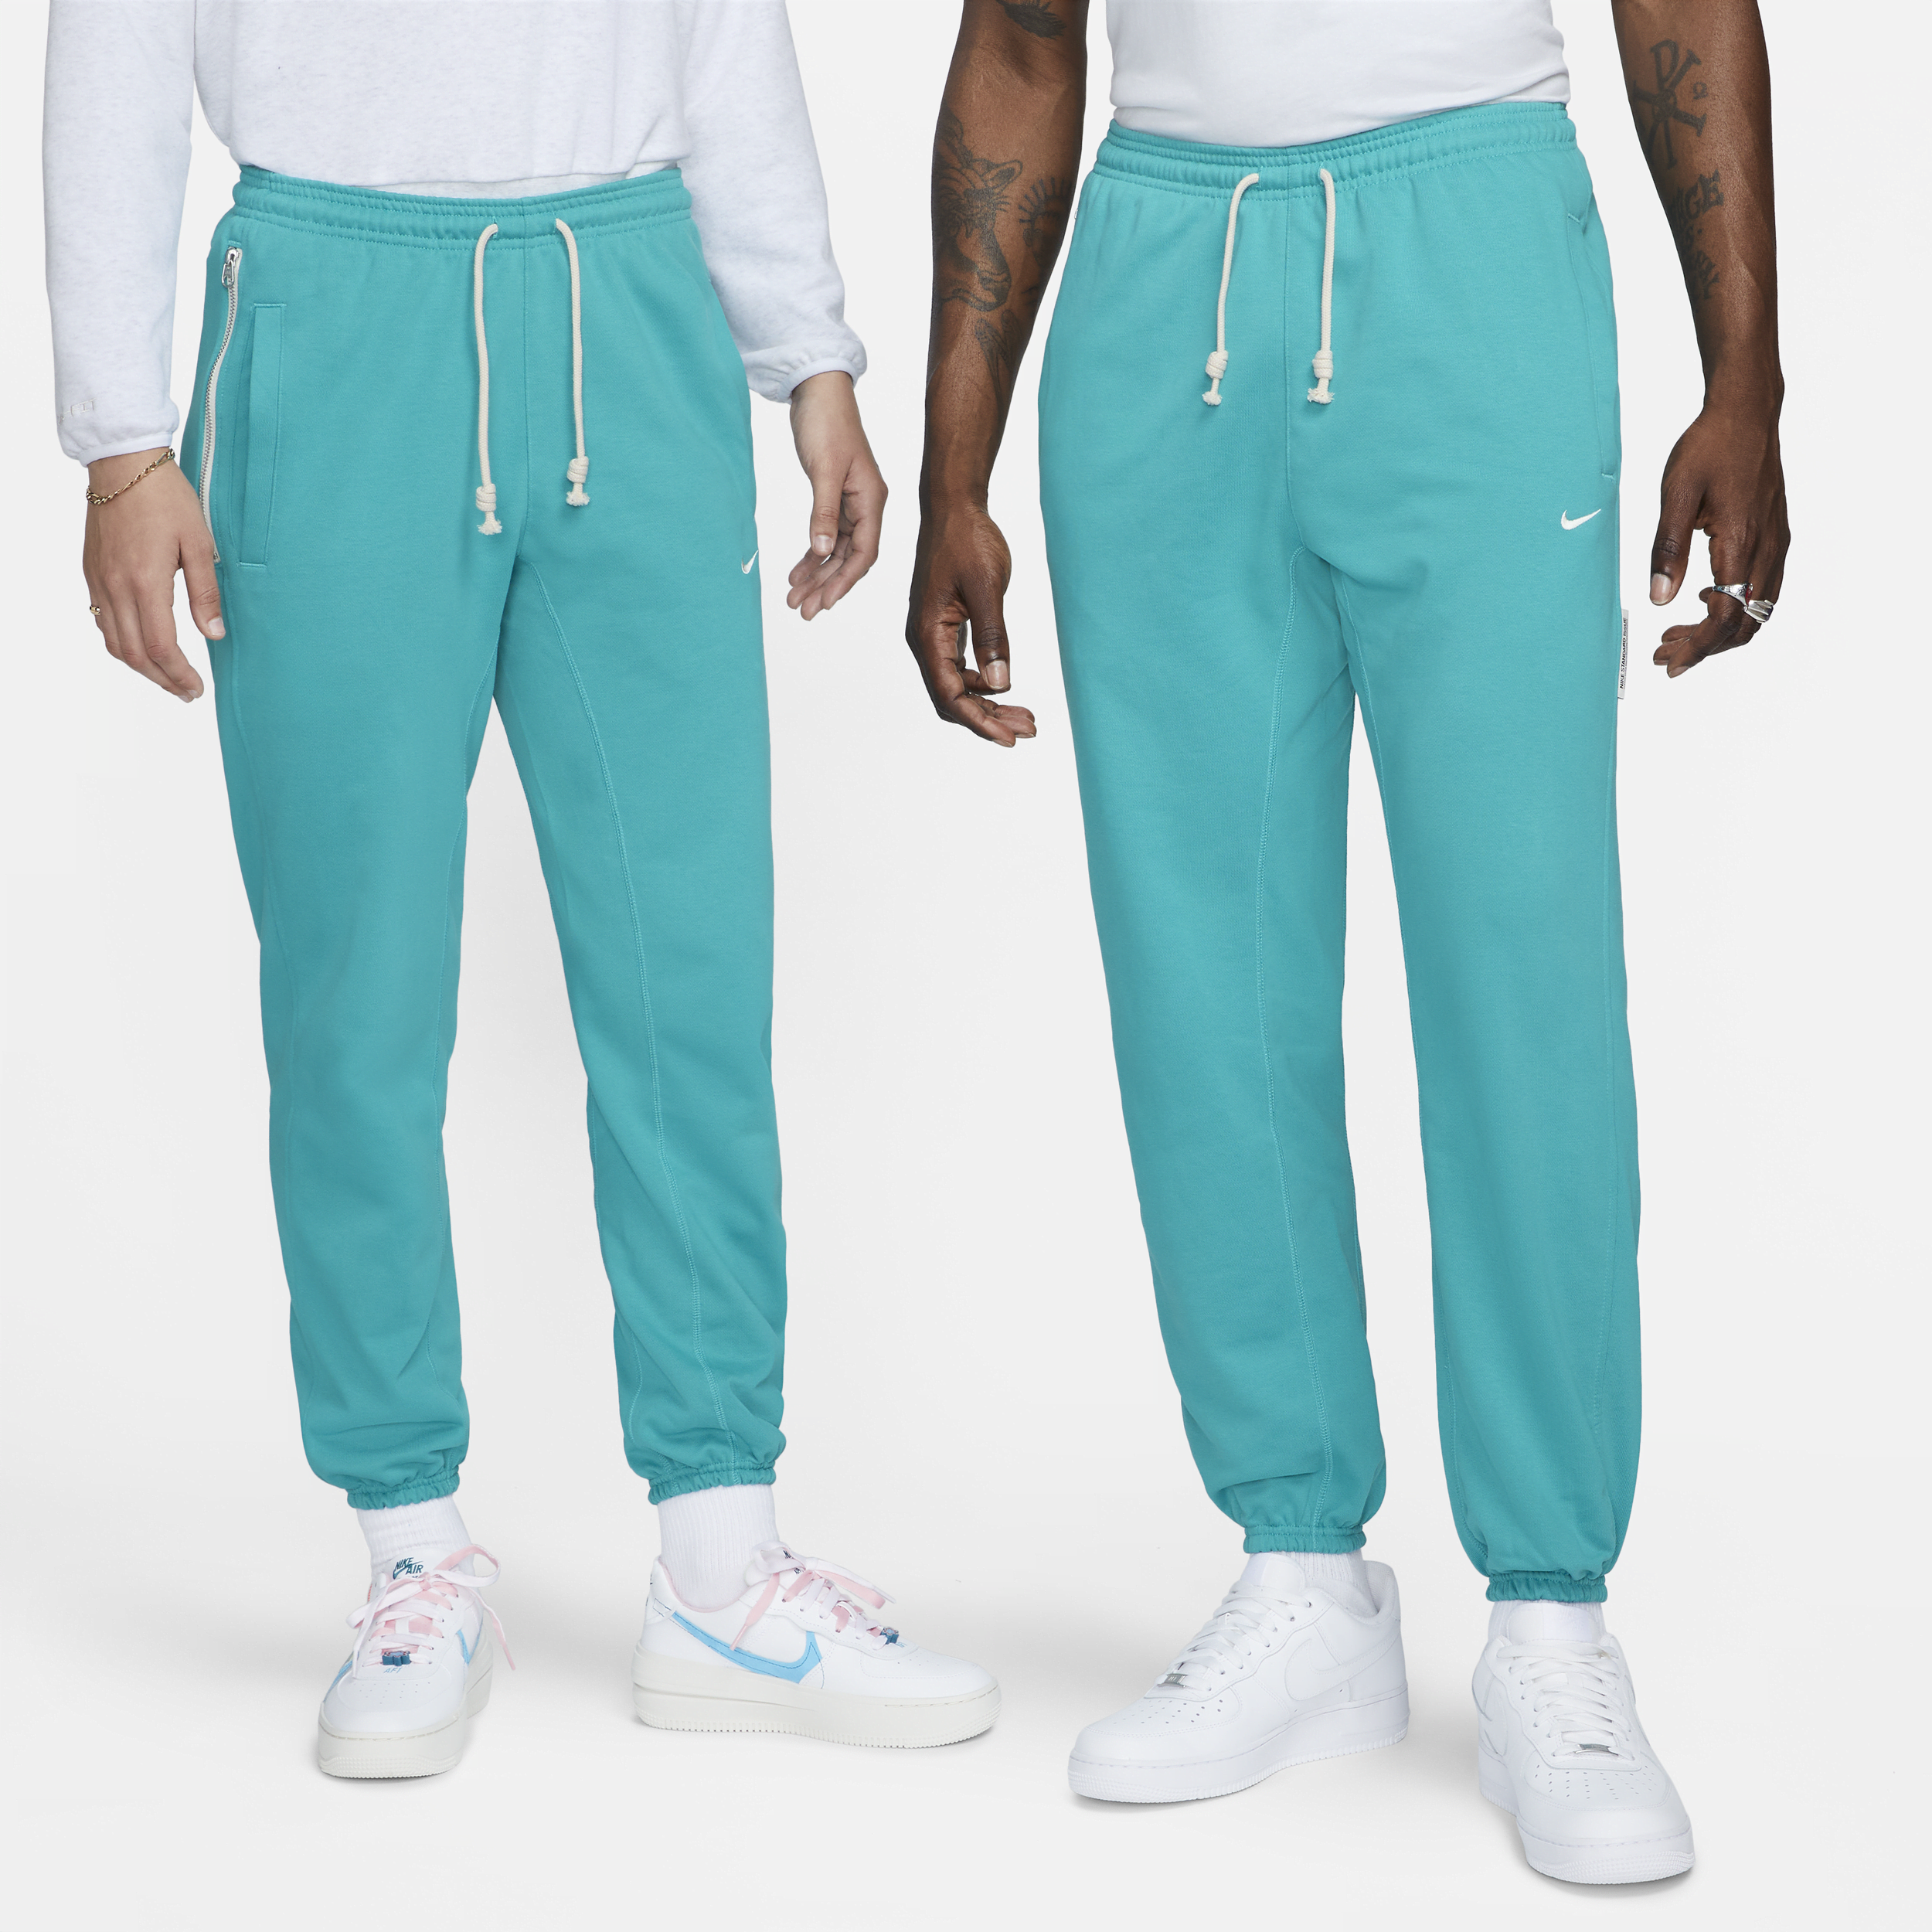 Nike Standard Issue Men's Dri-FIT Basketball Pants (DK Grey Heather/Pale  Ivory, CK6365-063)